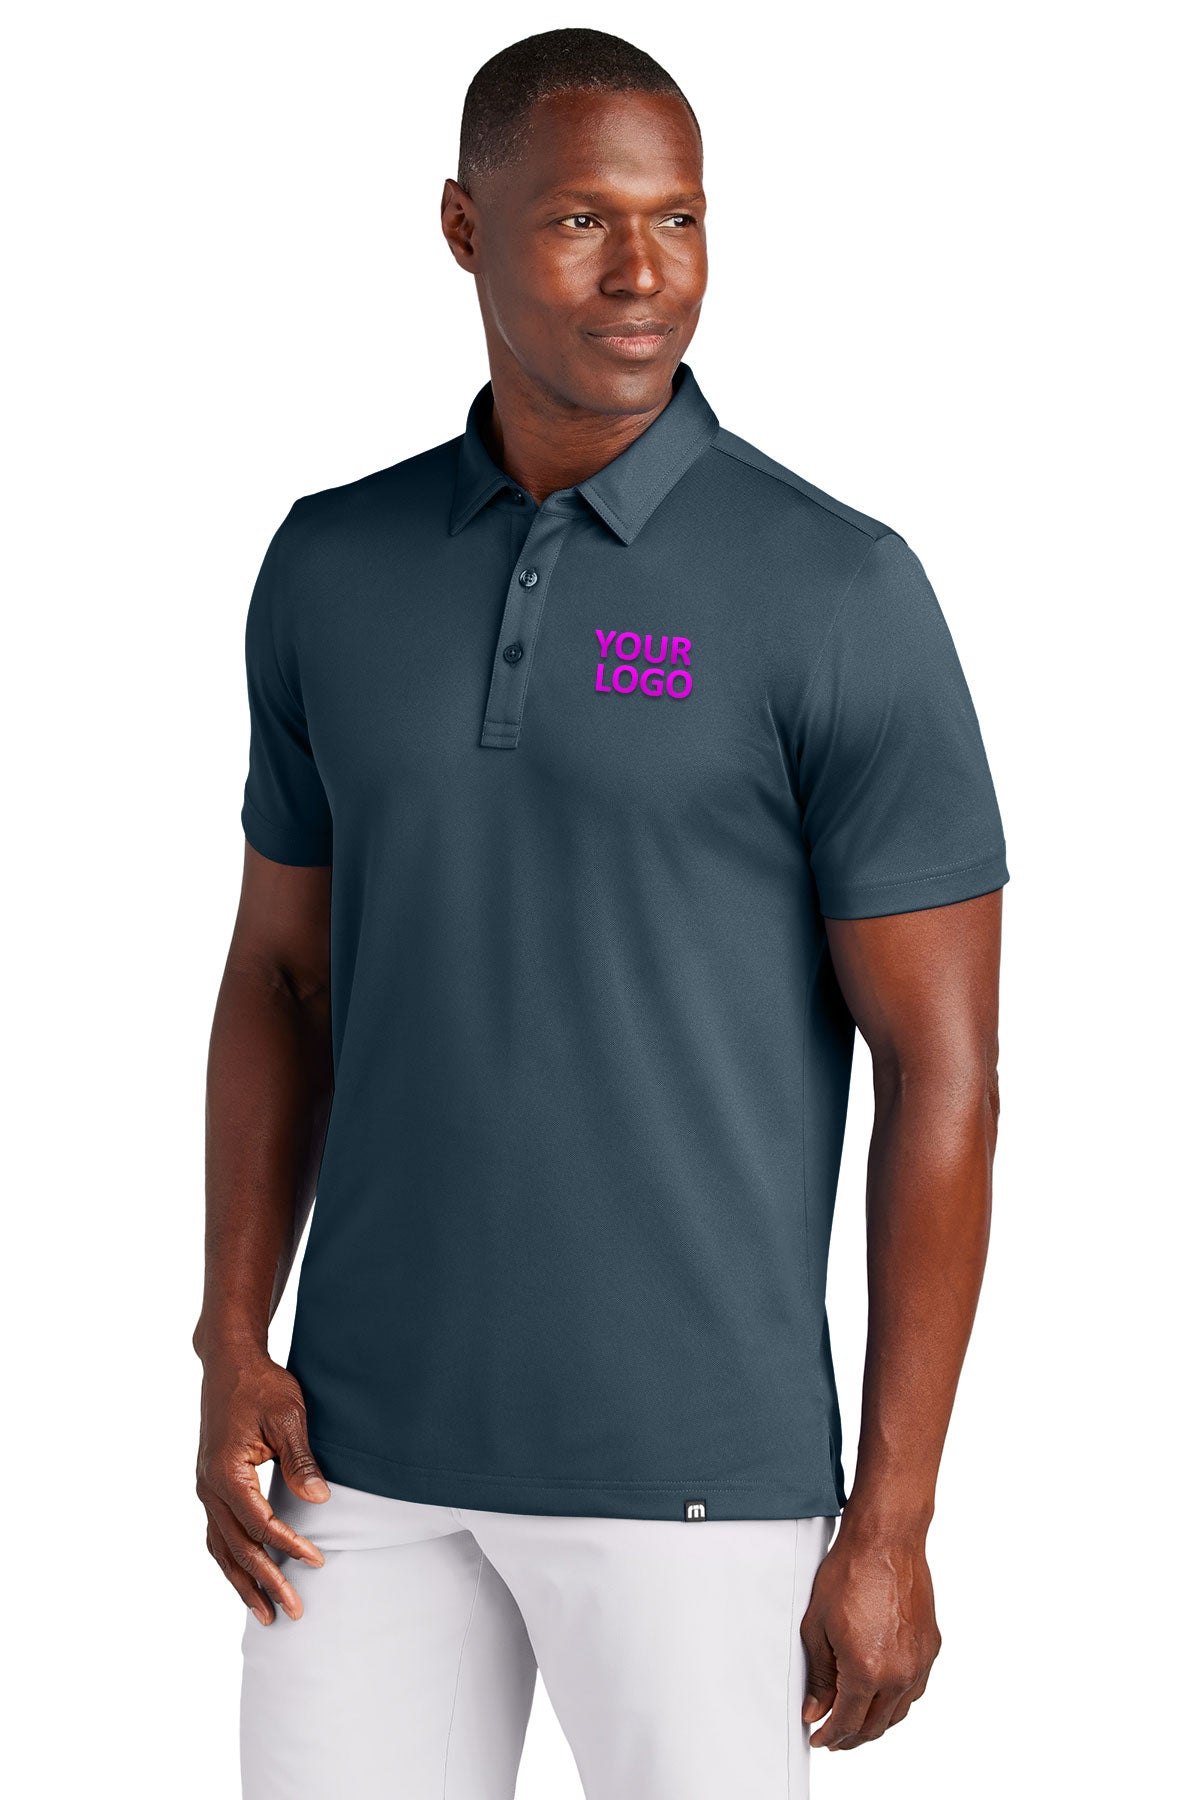 TravisMathew Blue Nights TM1MAA370 custom polo shirts with logo